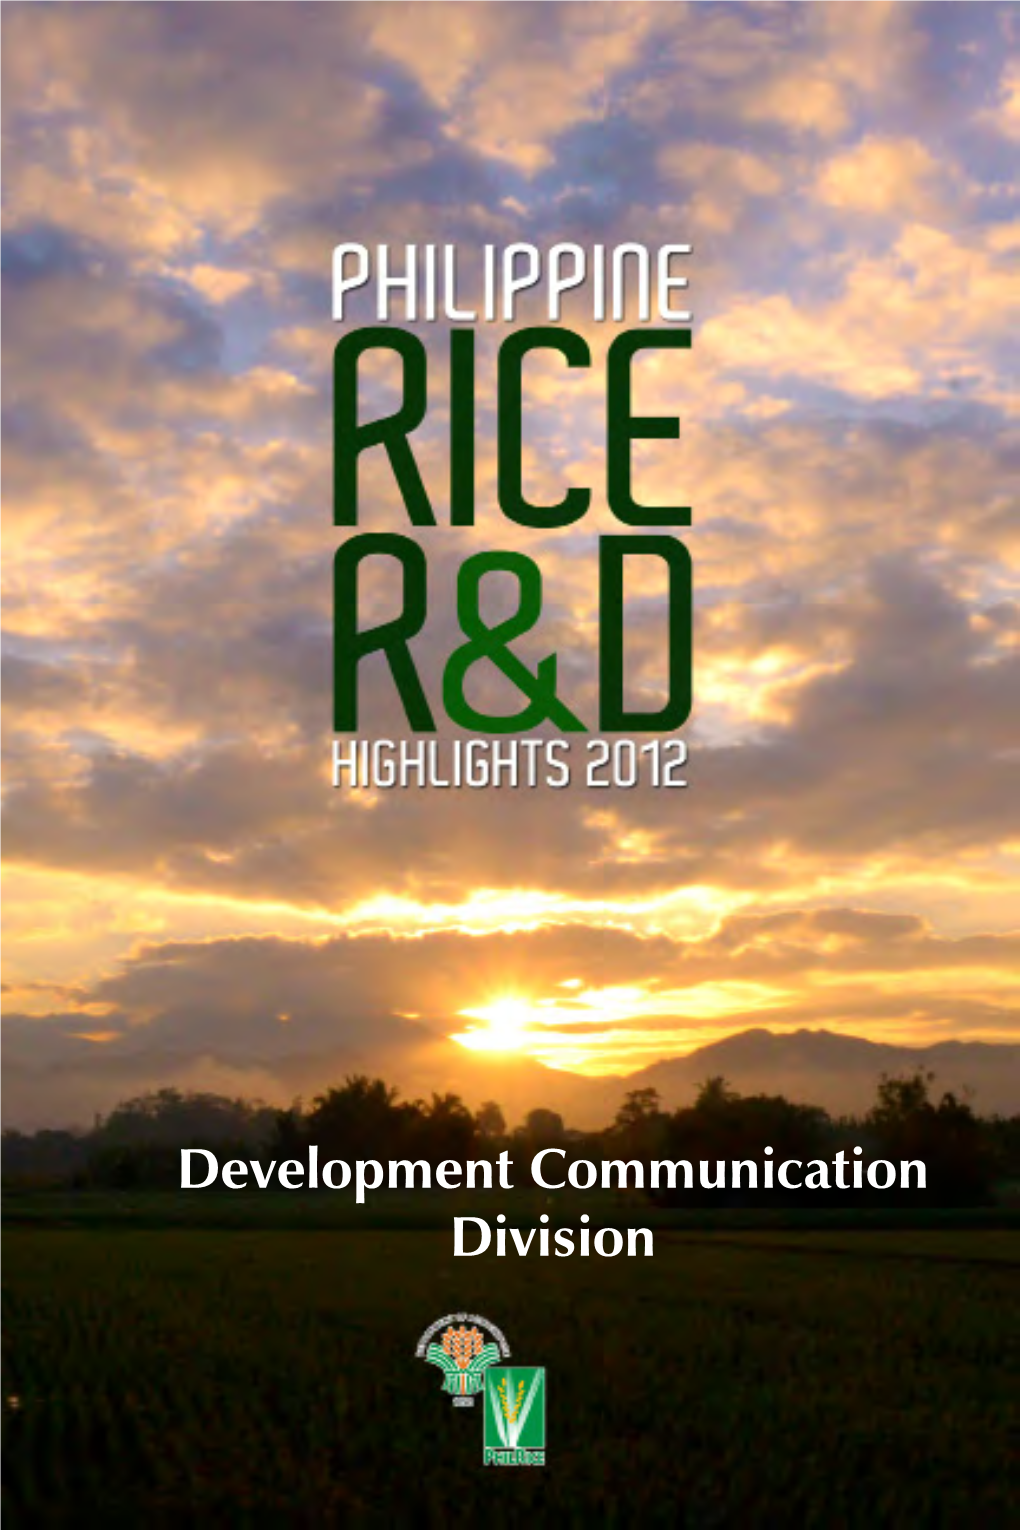 Development Communication Division